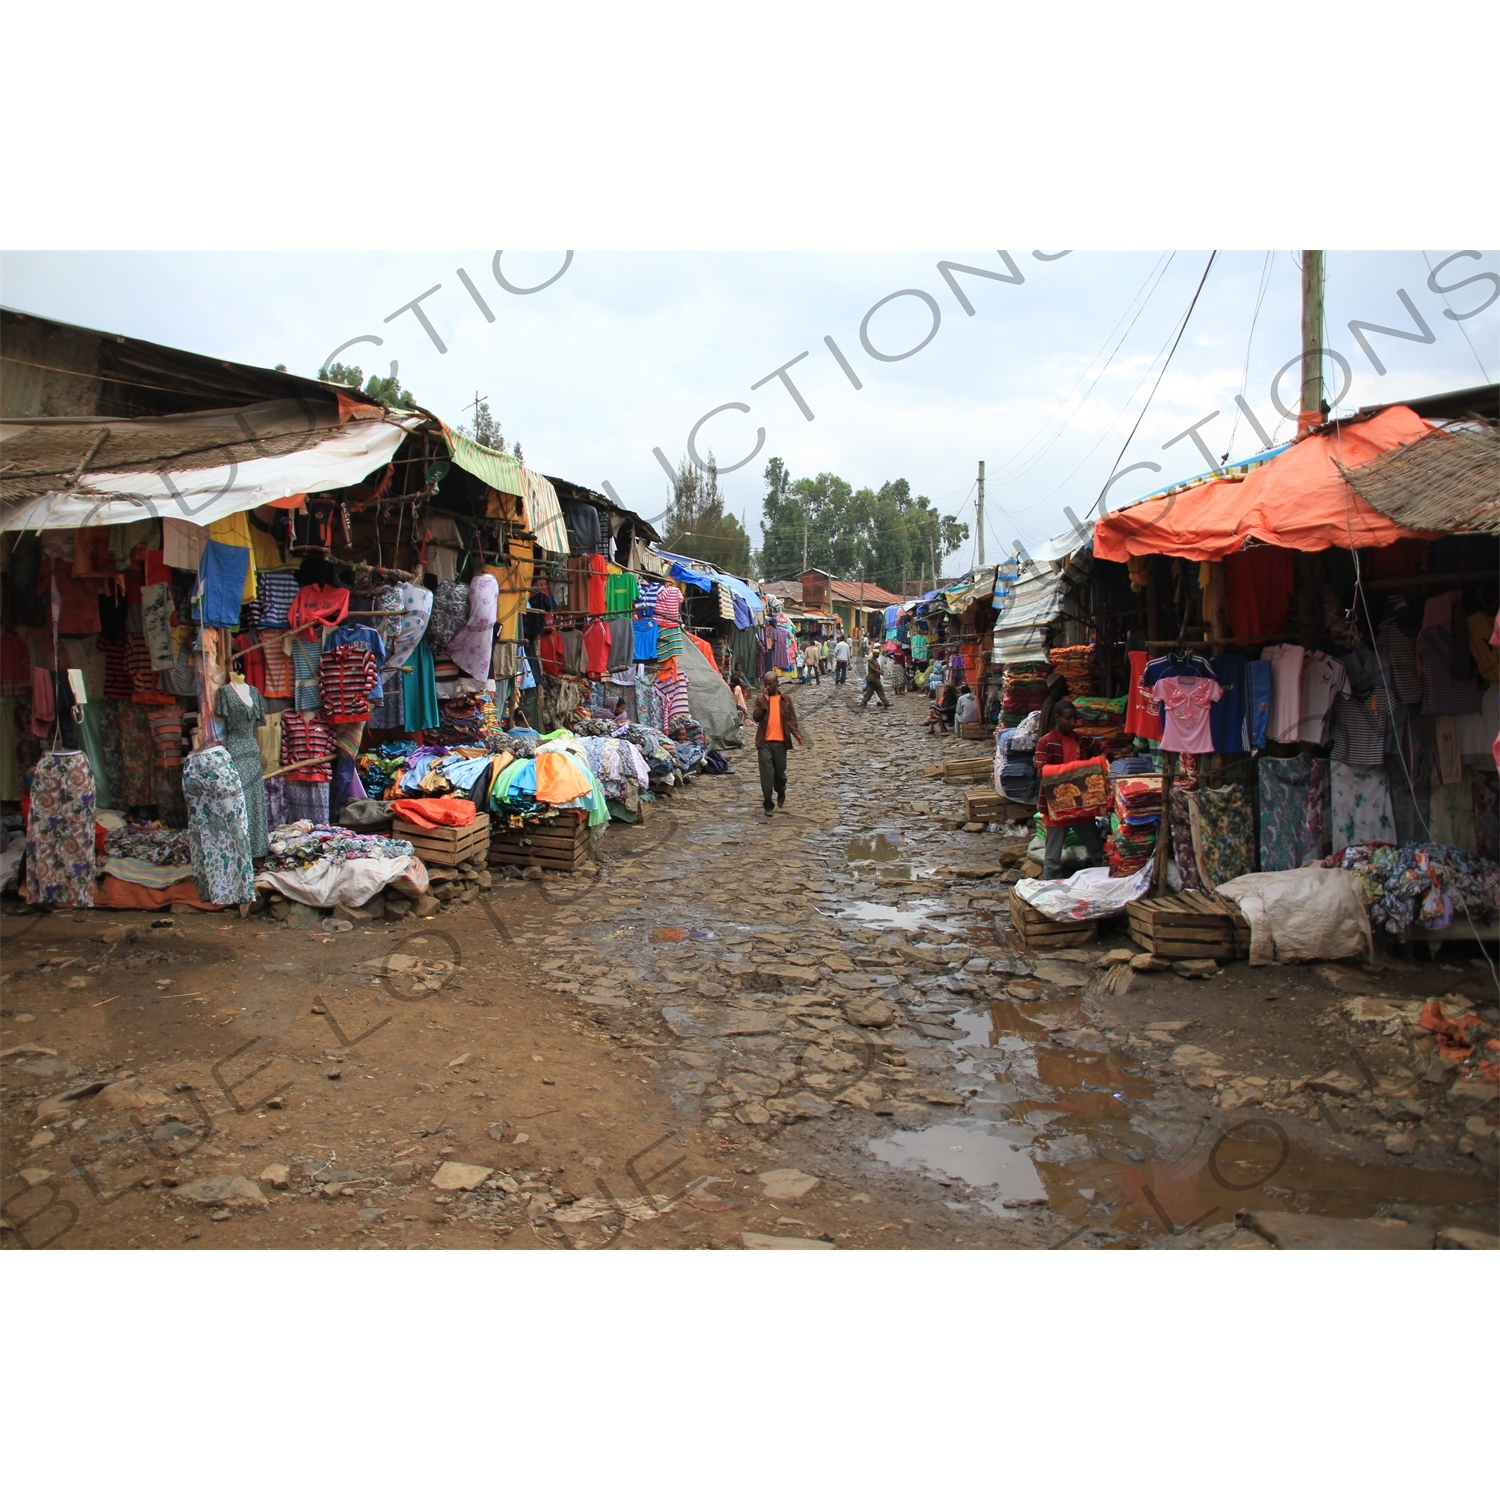 Market in Gondar